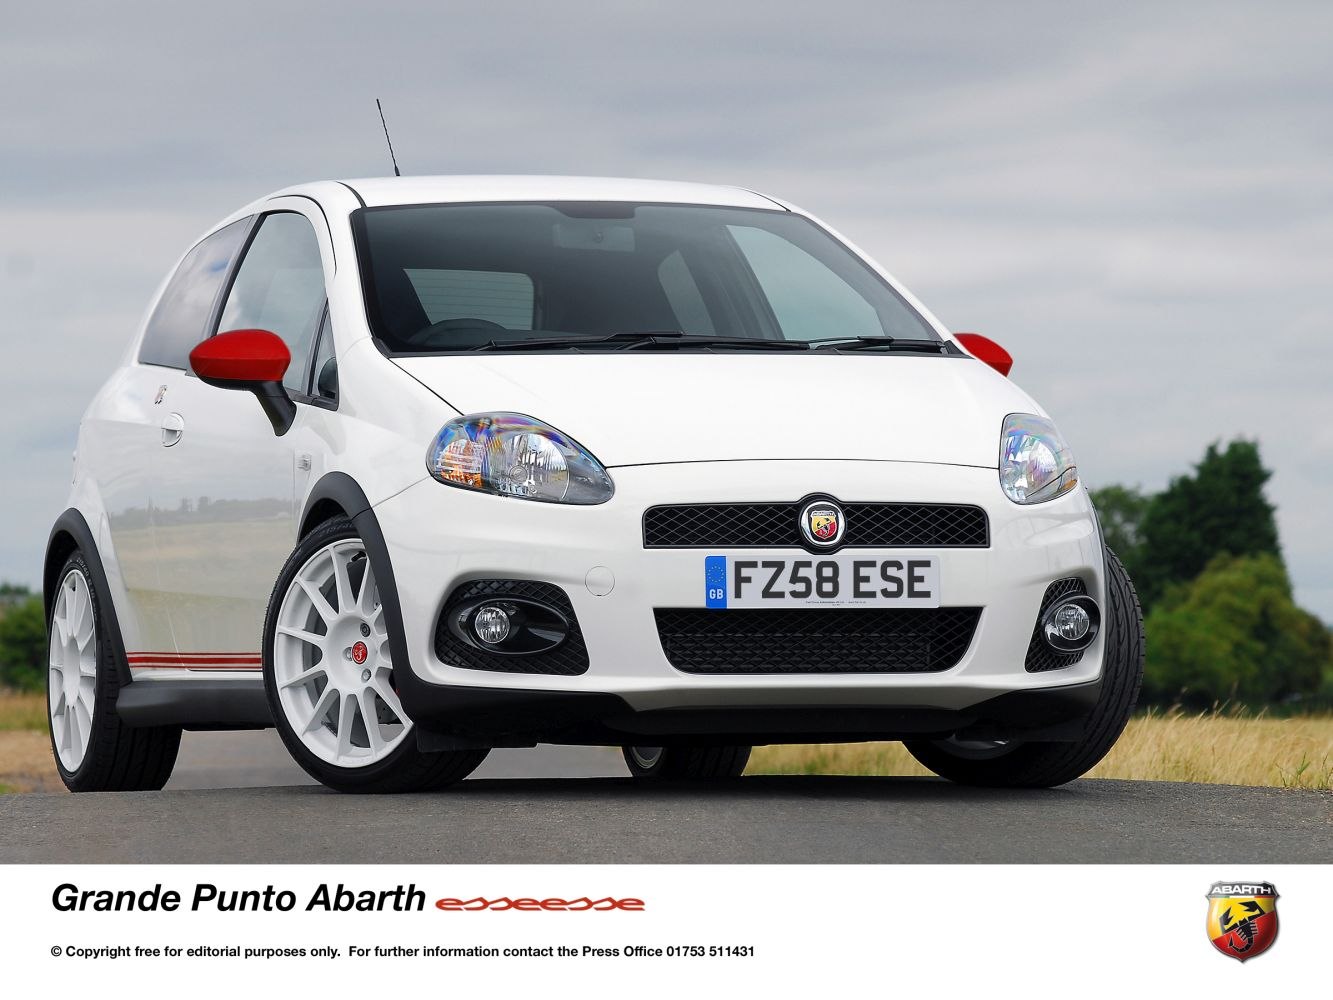 Specs for all Fiat Grande Punto versions